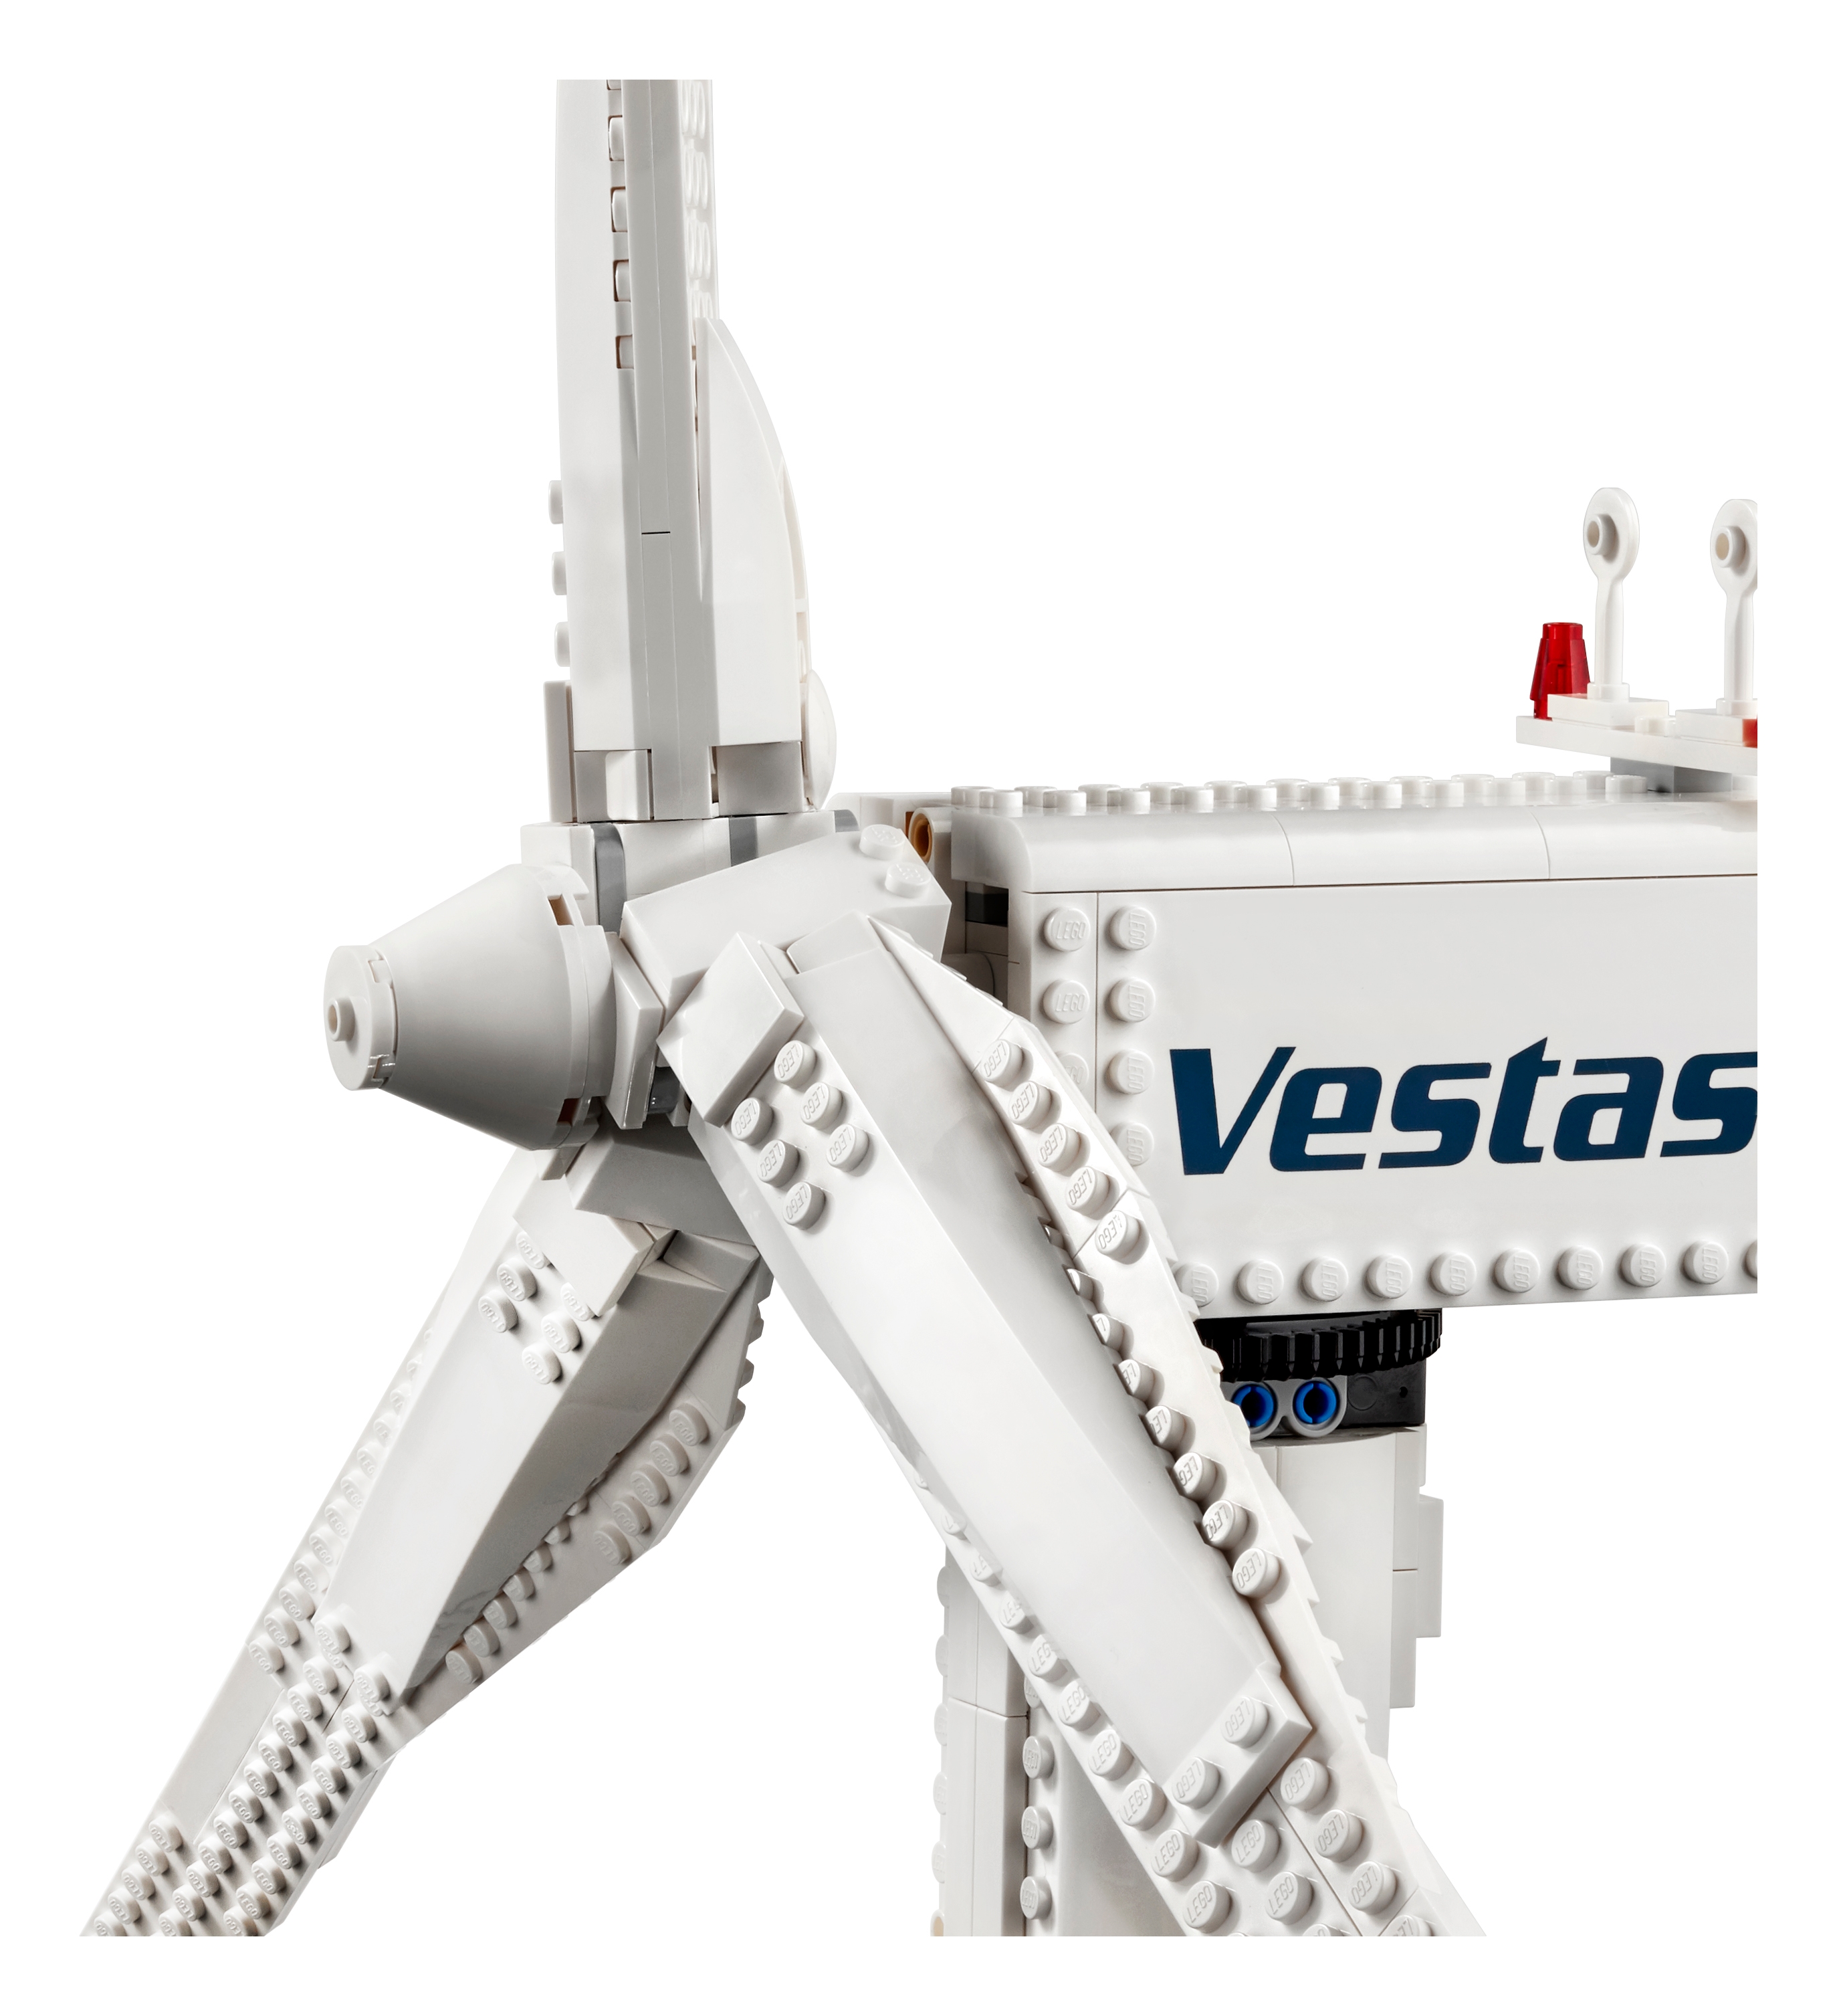 lego-creator-expert-vestas-wind-turbine-discount-buy-save-62-jlcatj